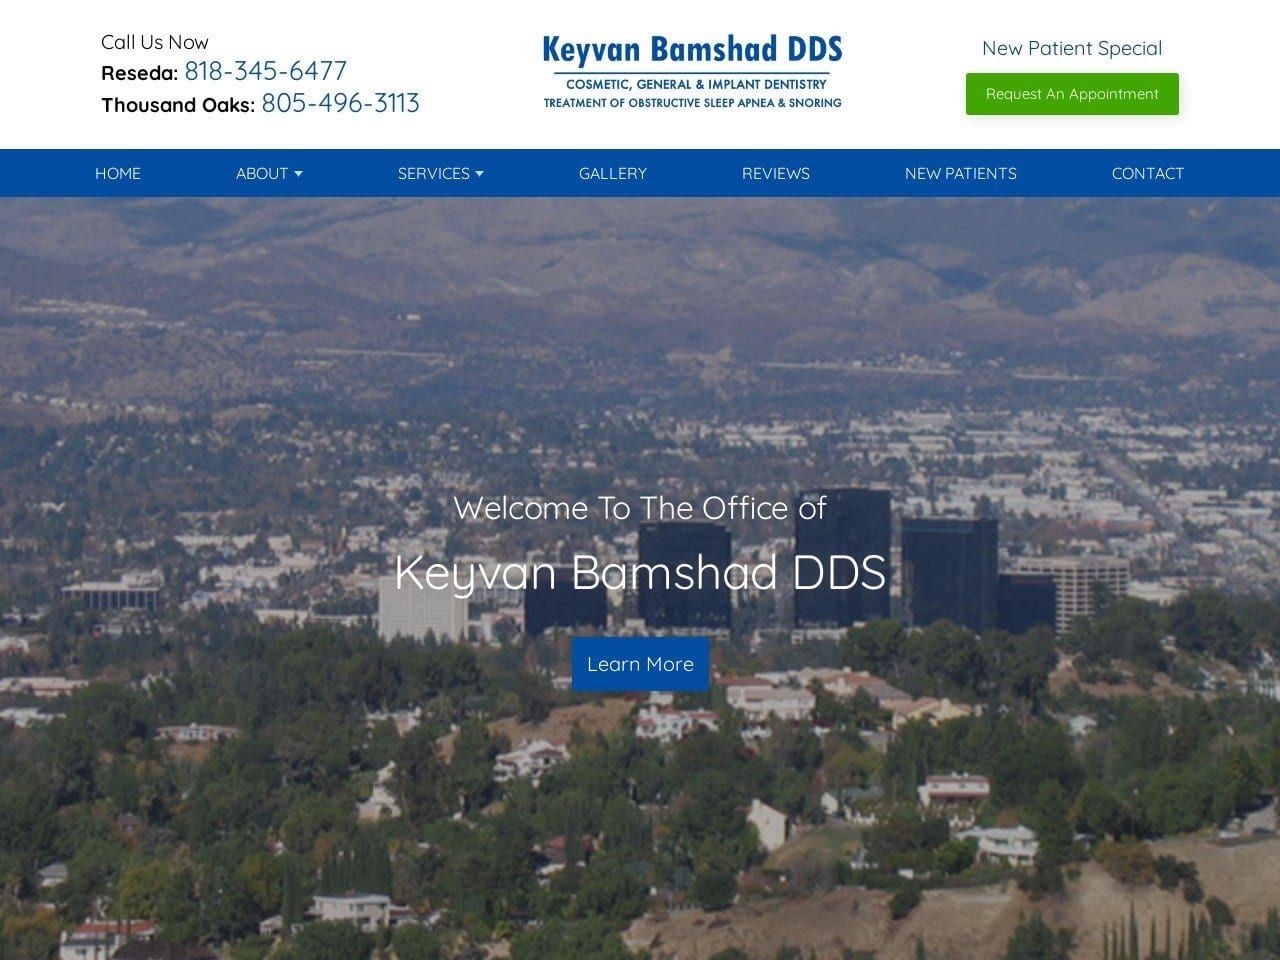 Bamshad Keyvan DDS Website Screenshot from sfvdentalgroup.com